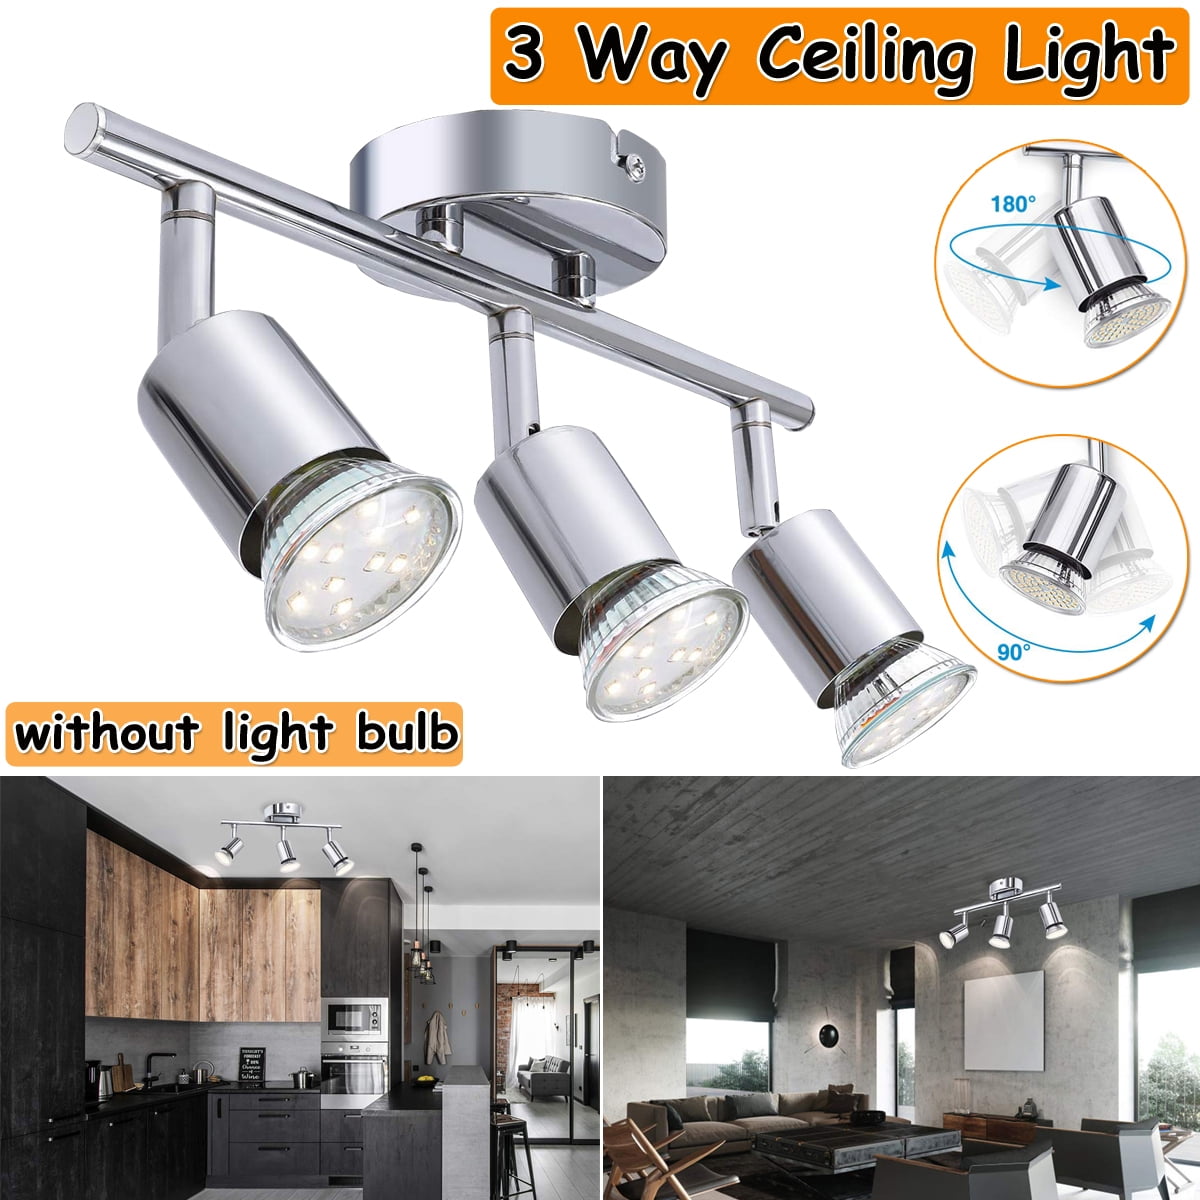 Square 4 Way Adjustable Ceiling Light Spotlight Fitting Kitchen GU10 Mains 240V 